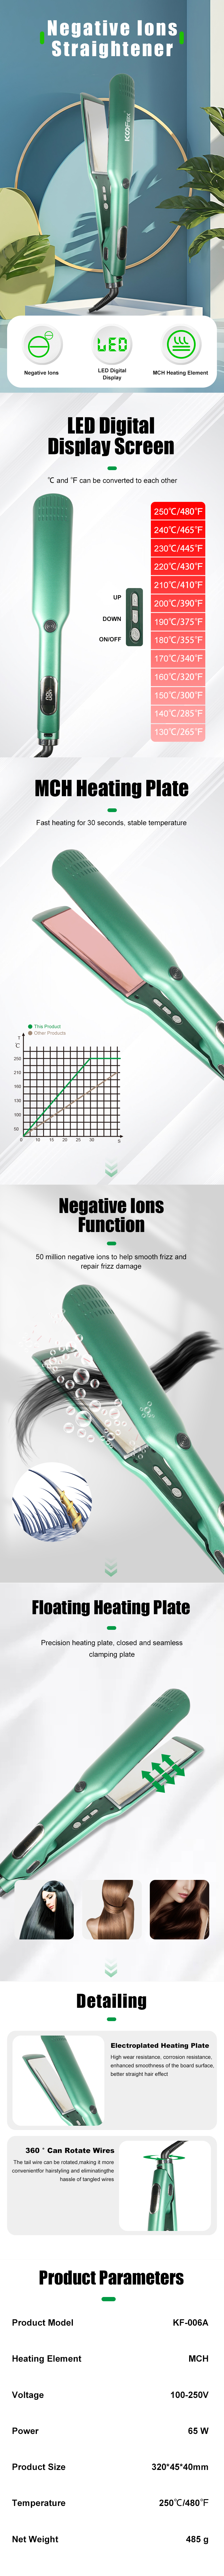 006A negative iron hair straightener details page